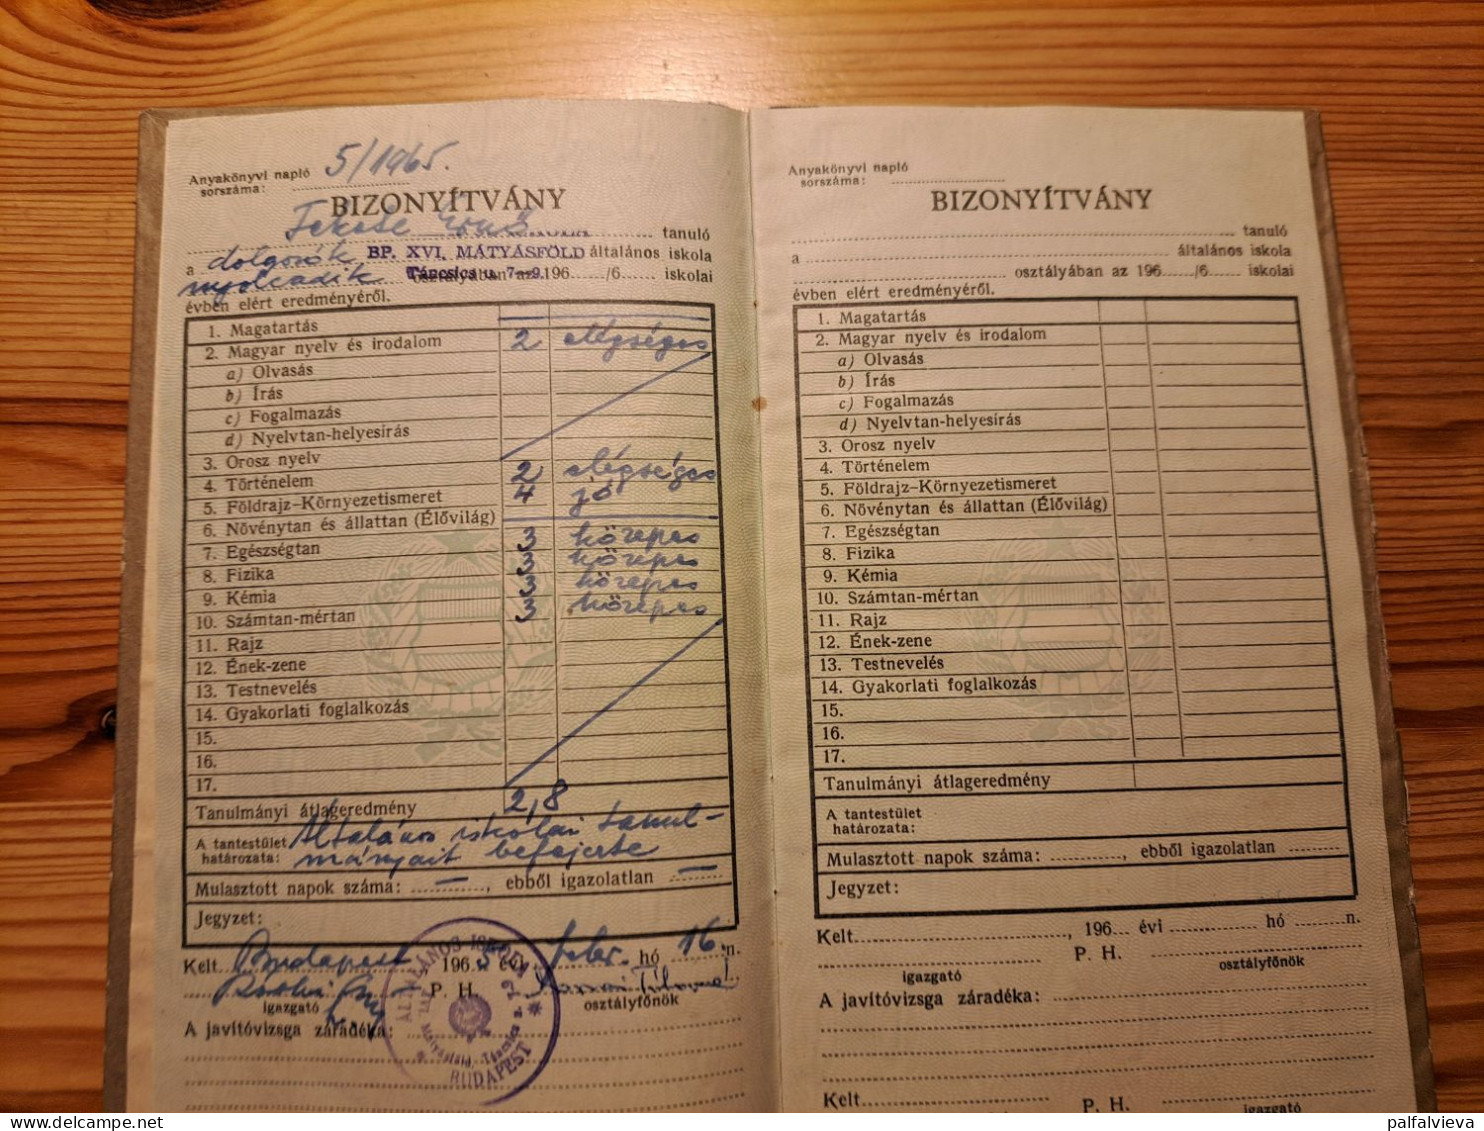 School Report, Elementary School 1965 - Hungary - Diplome Und Schulzeugnisse